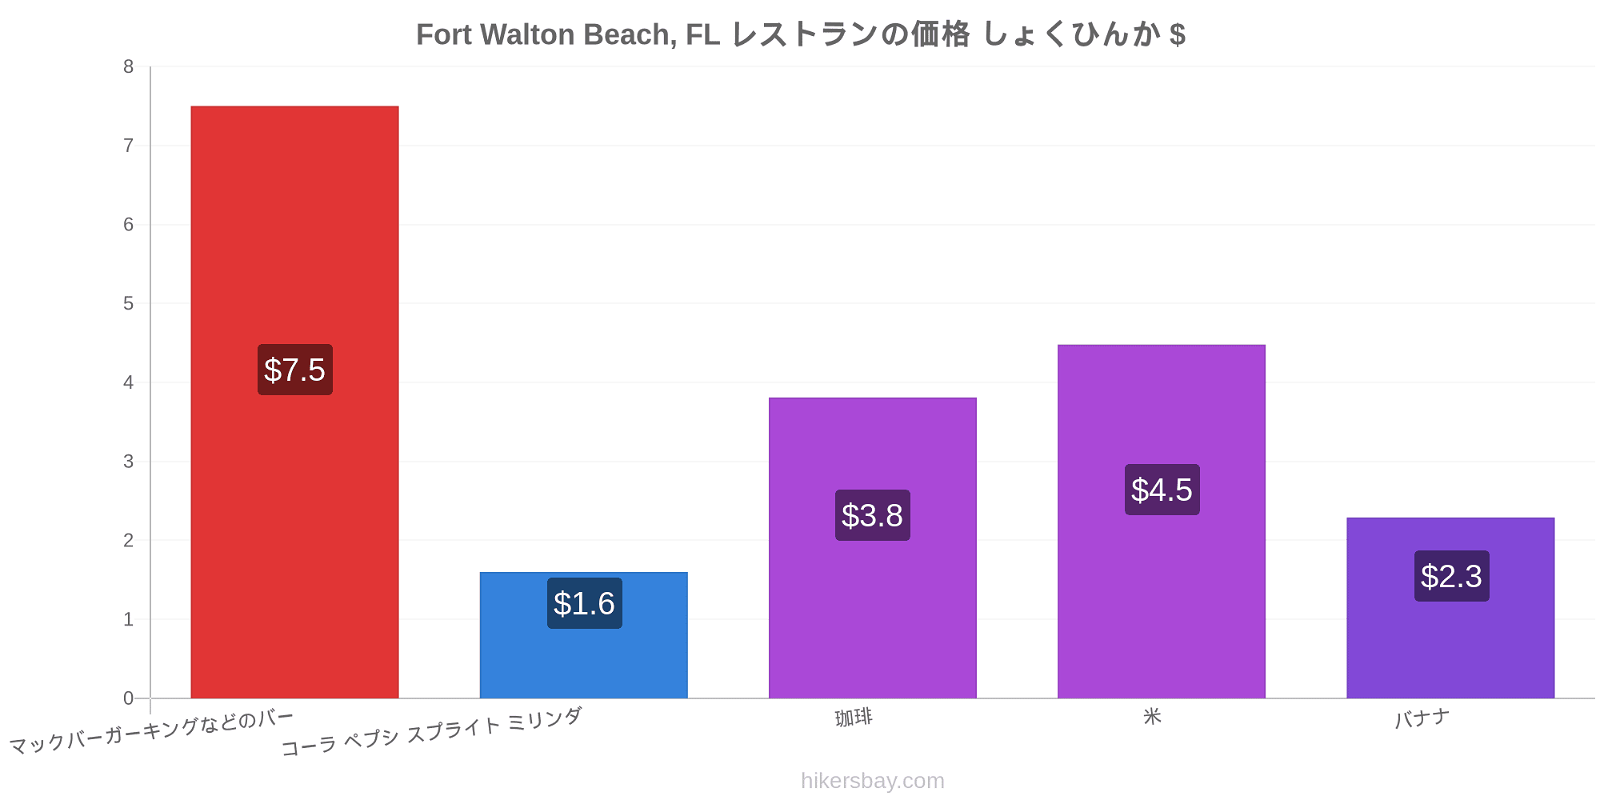 Fort Walton Beach, FL 価格の変更 hikersbay.com